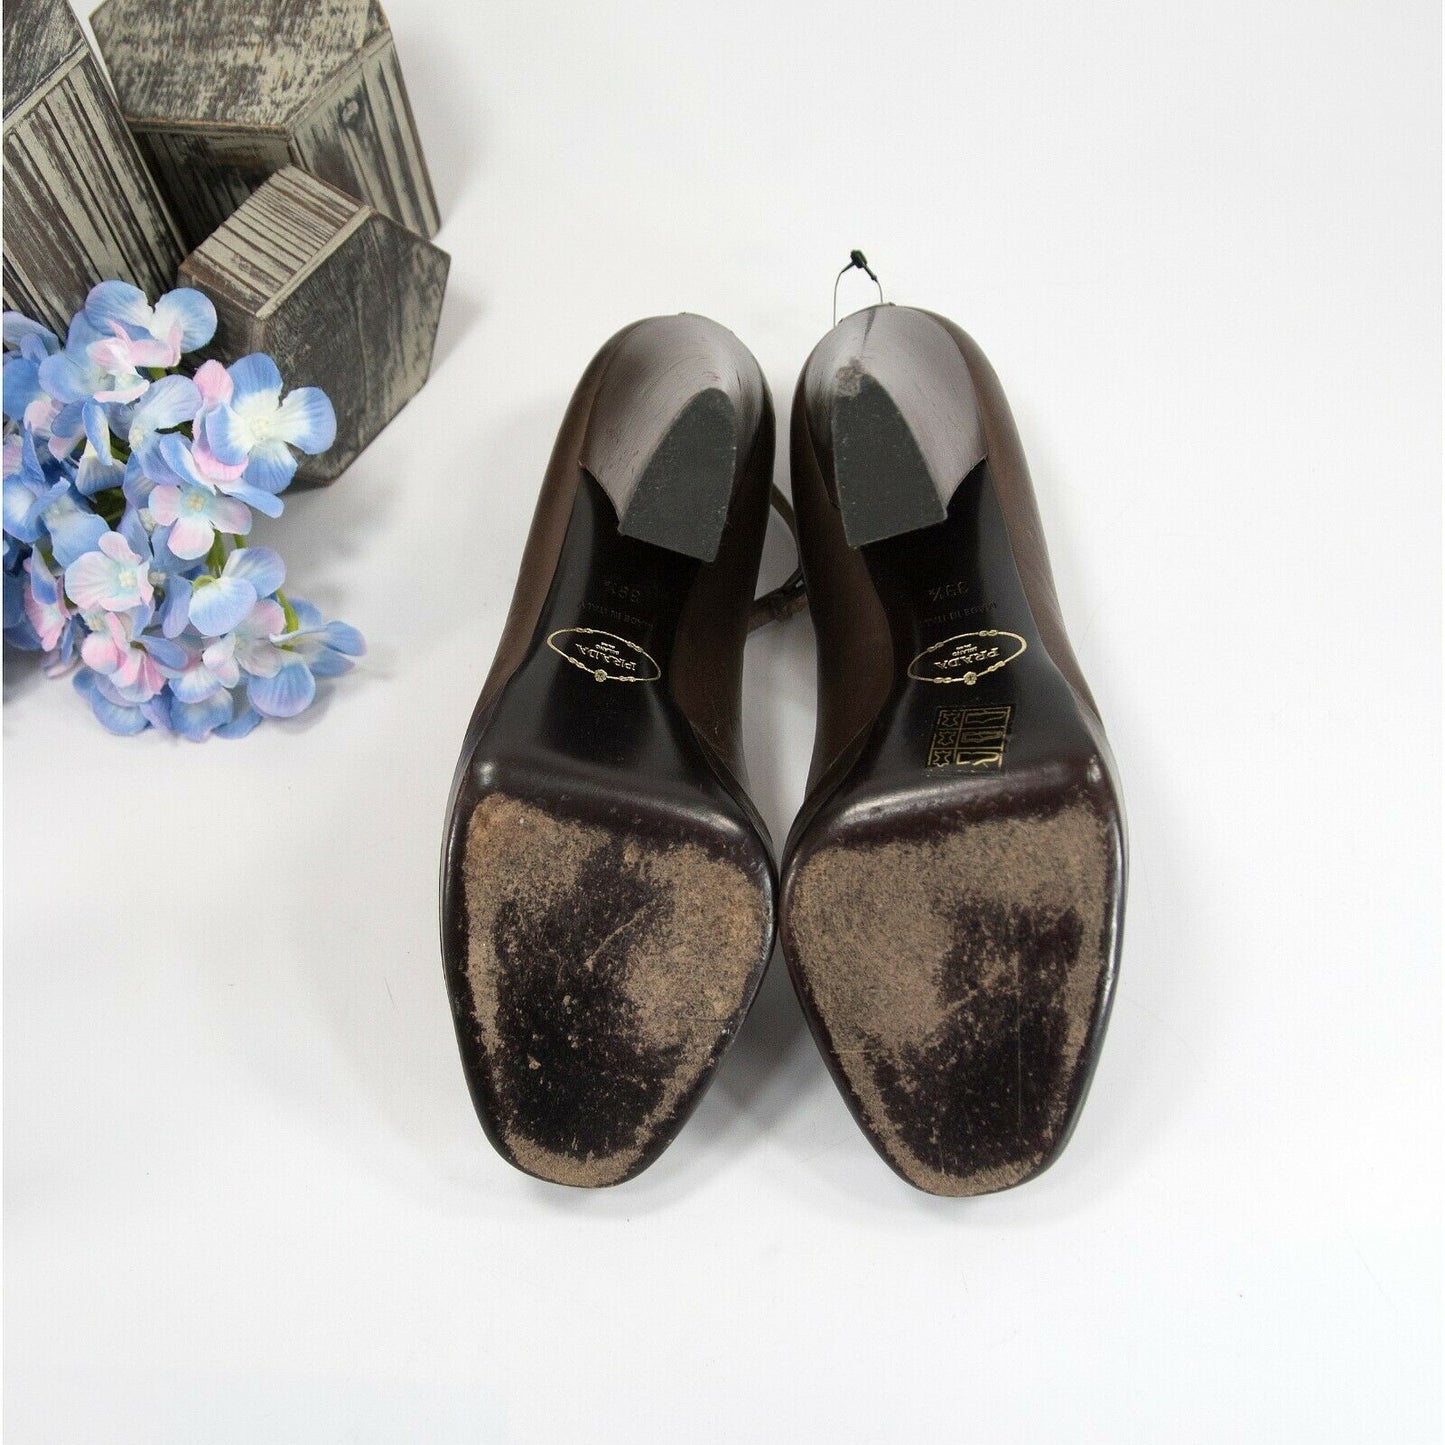 Prada Brown Leather Ankle Strap Platform Pumps Heels Size 39.5 GUC